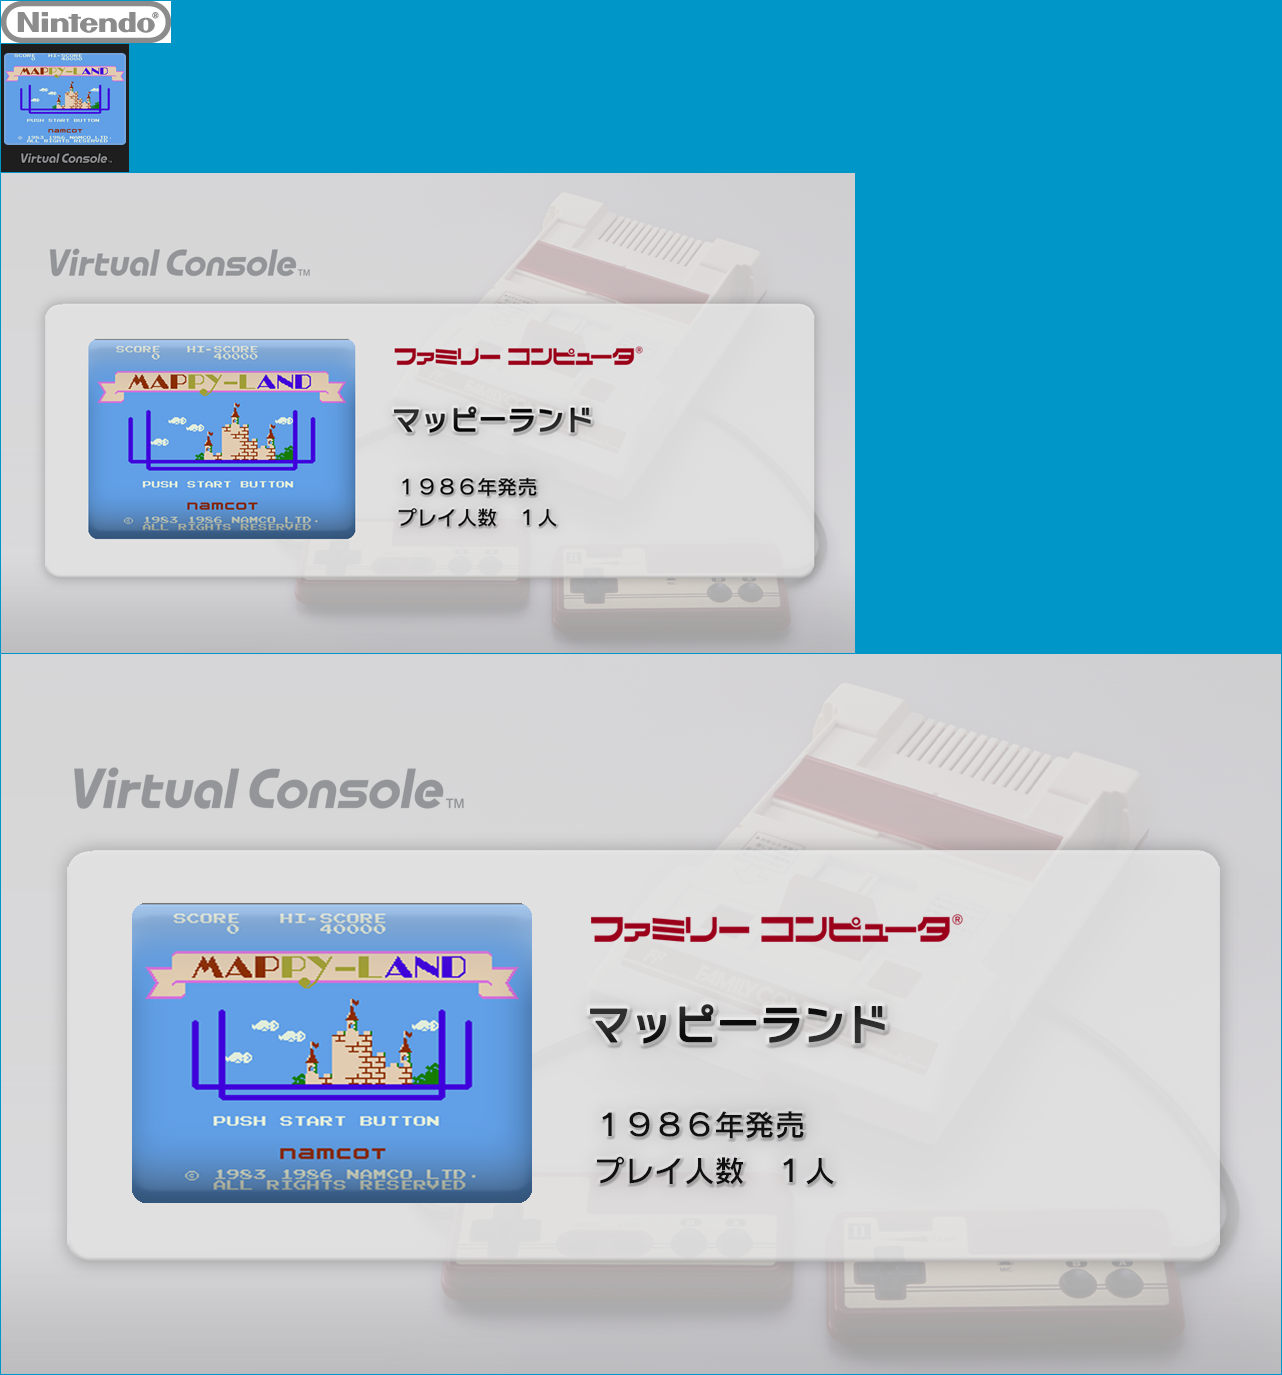 Virtual Console - Mappy-Land